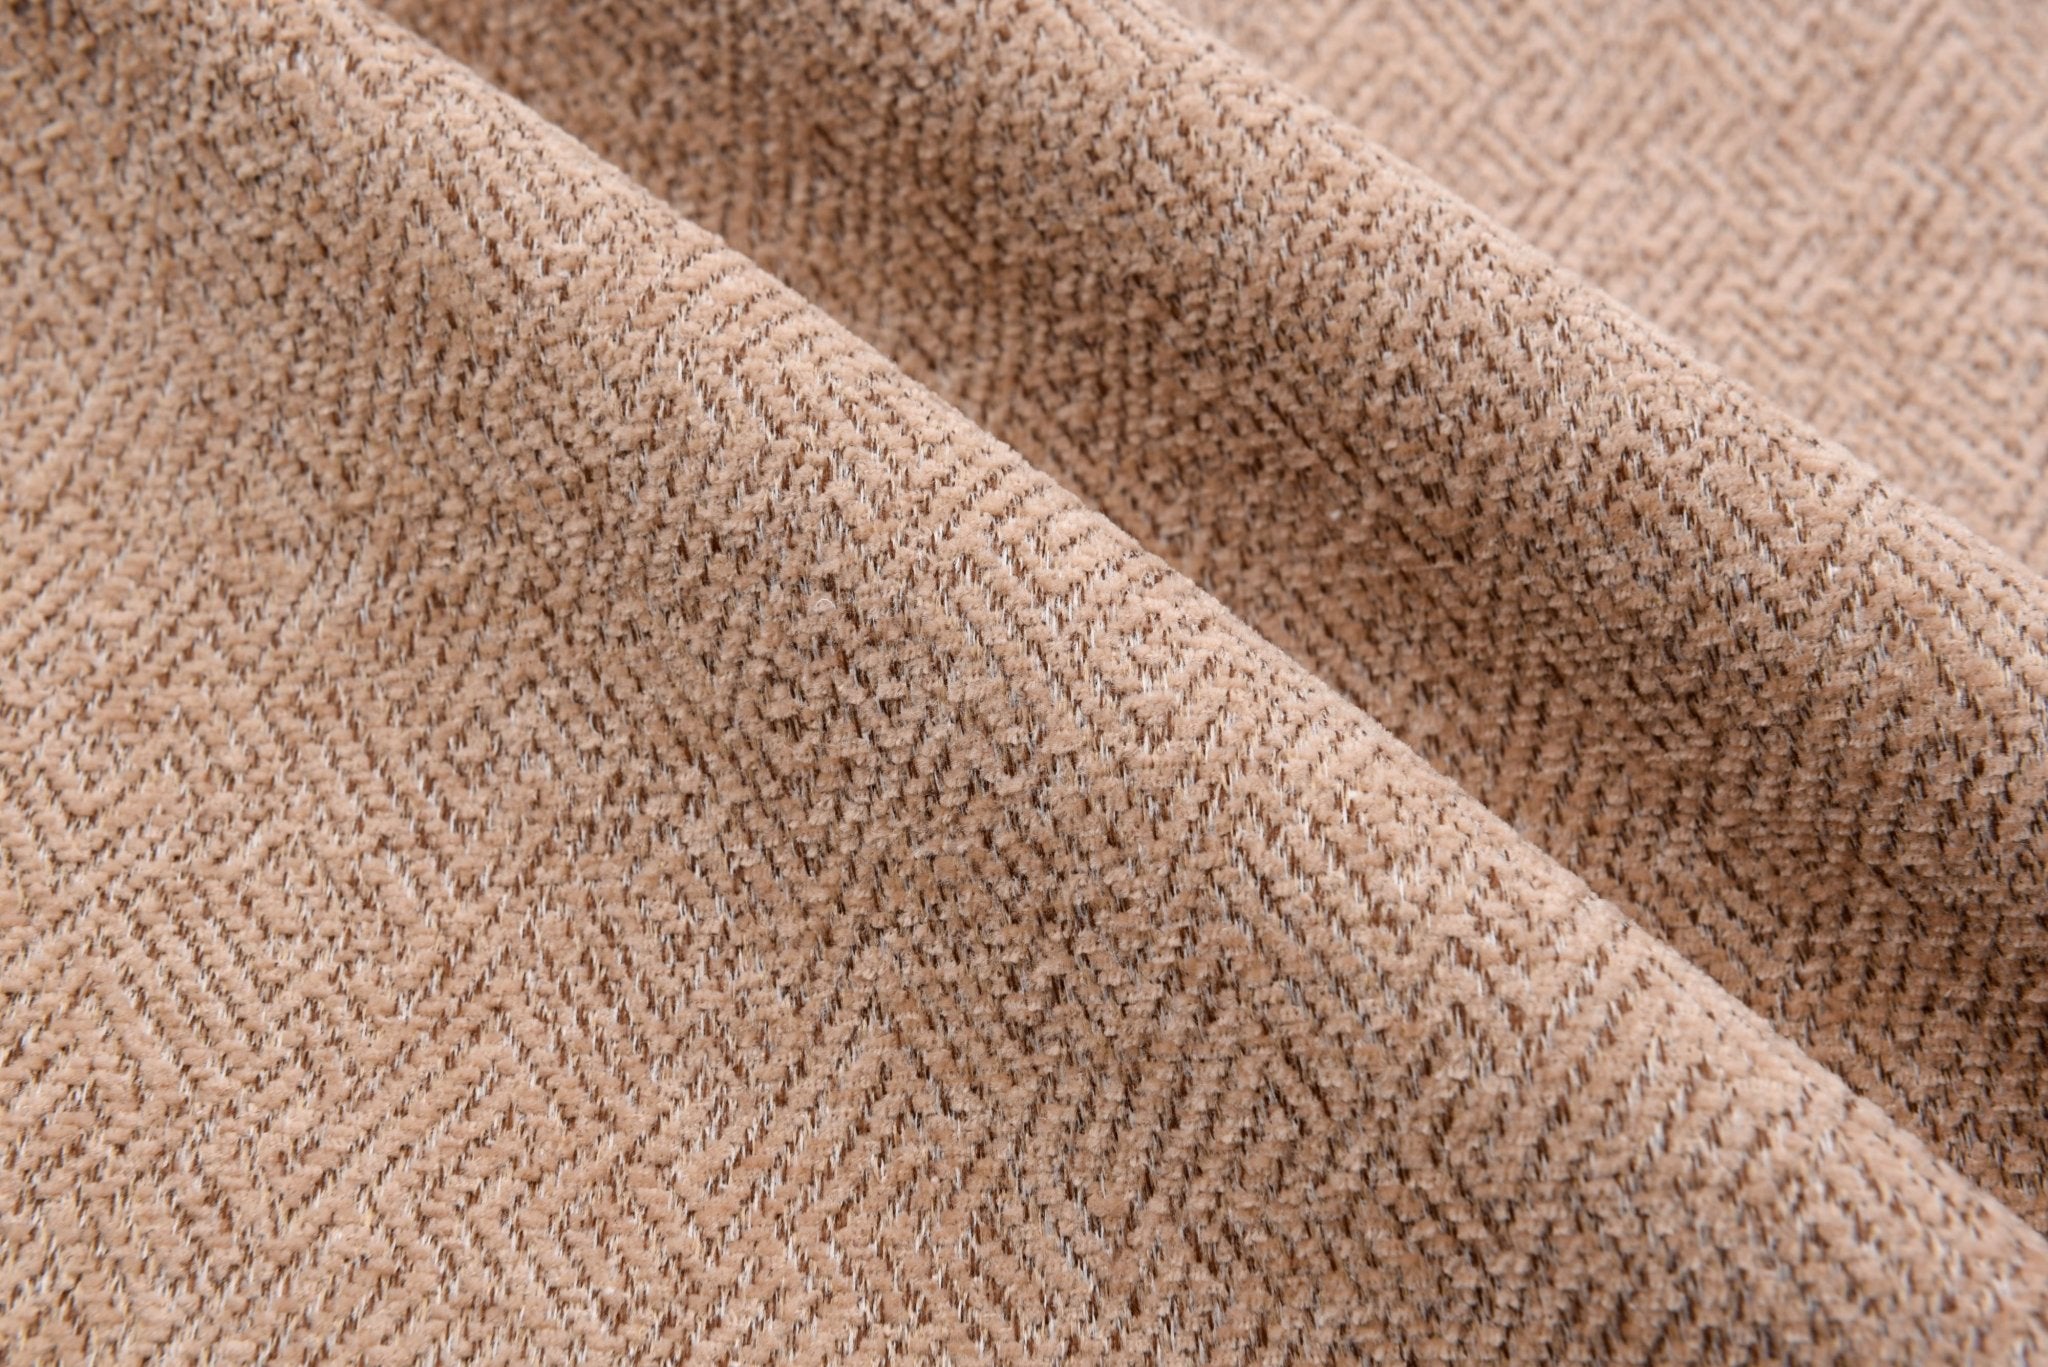 6038822 NEIMAN APPLEGREEN Chenille Upholstery Fabric